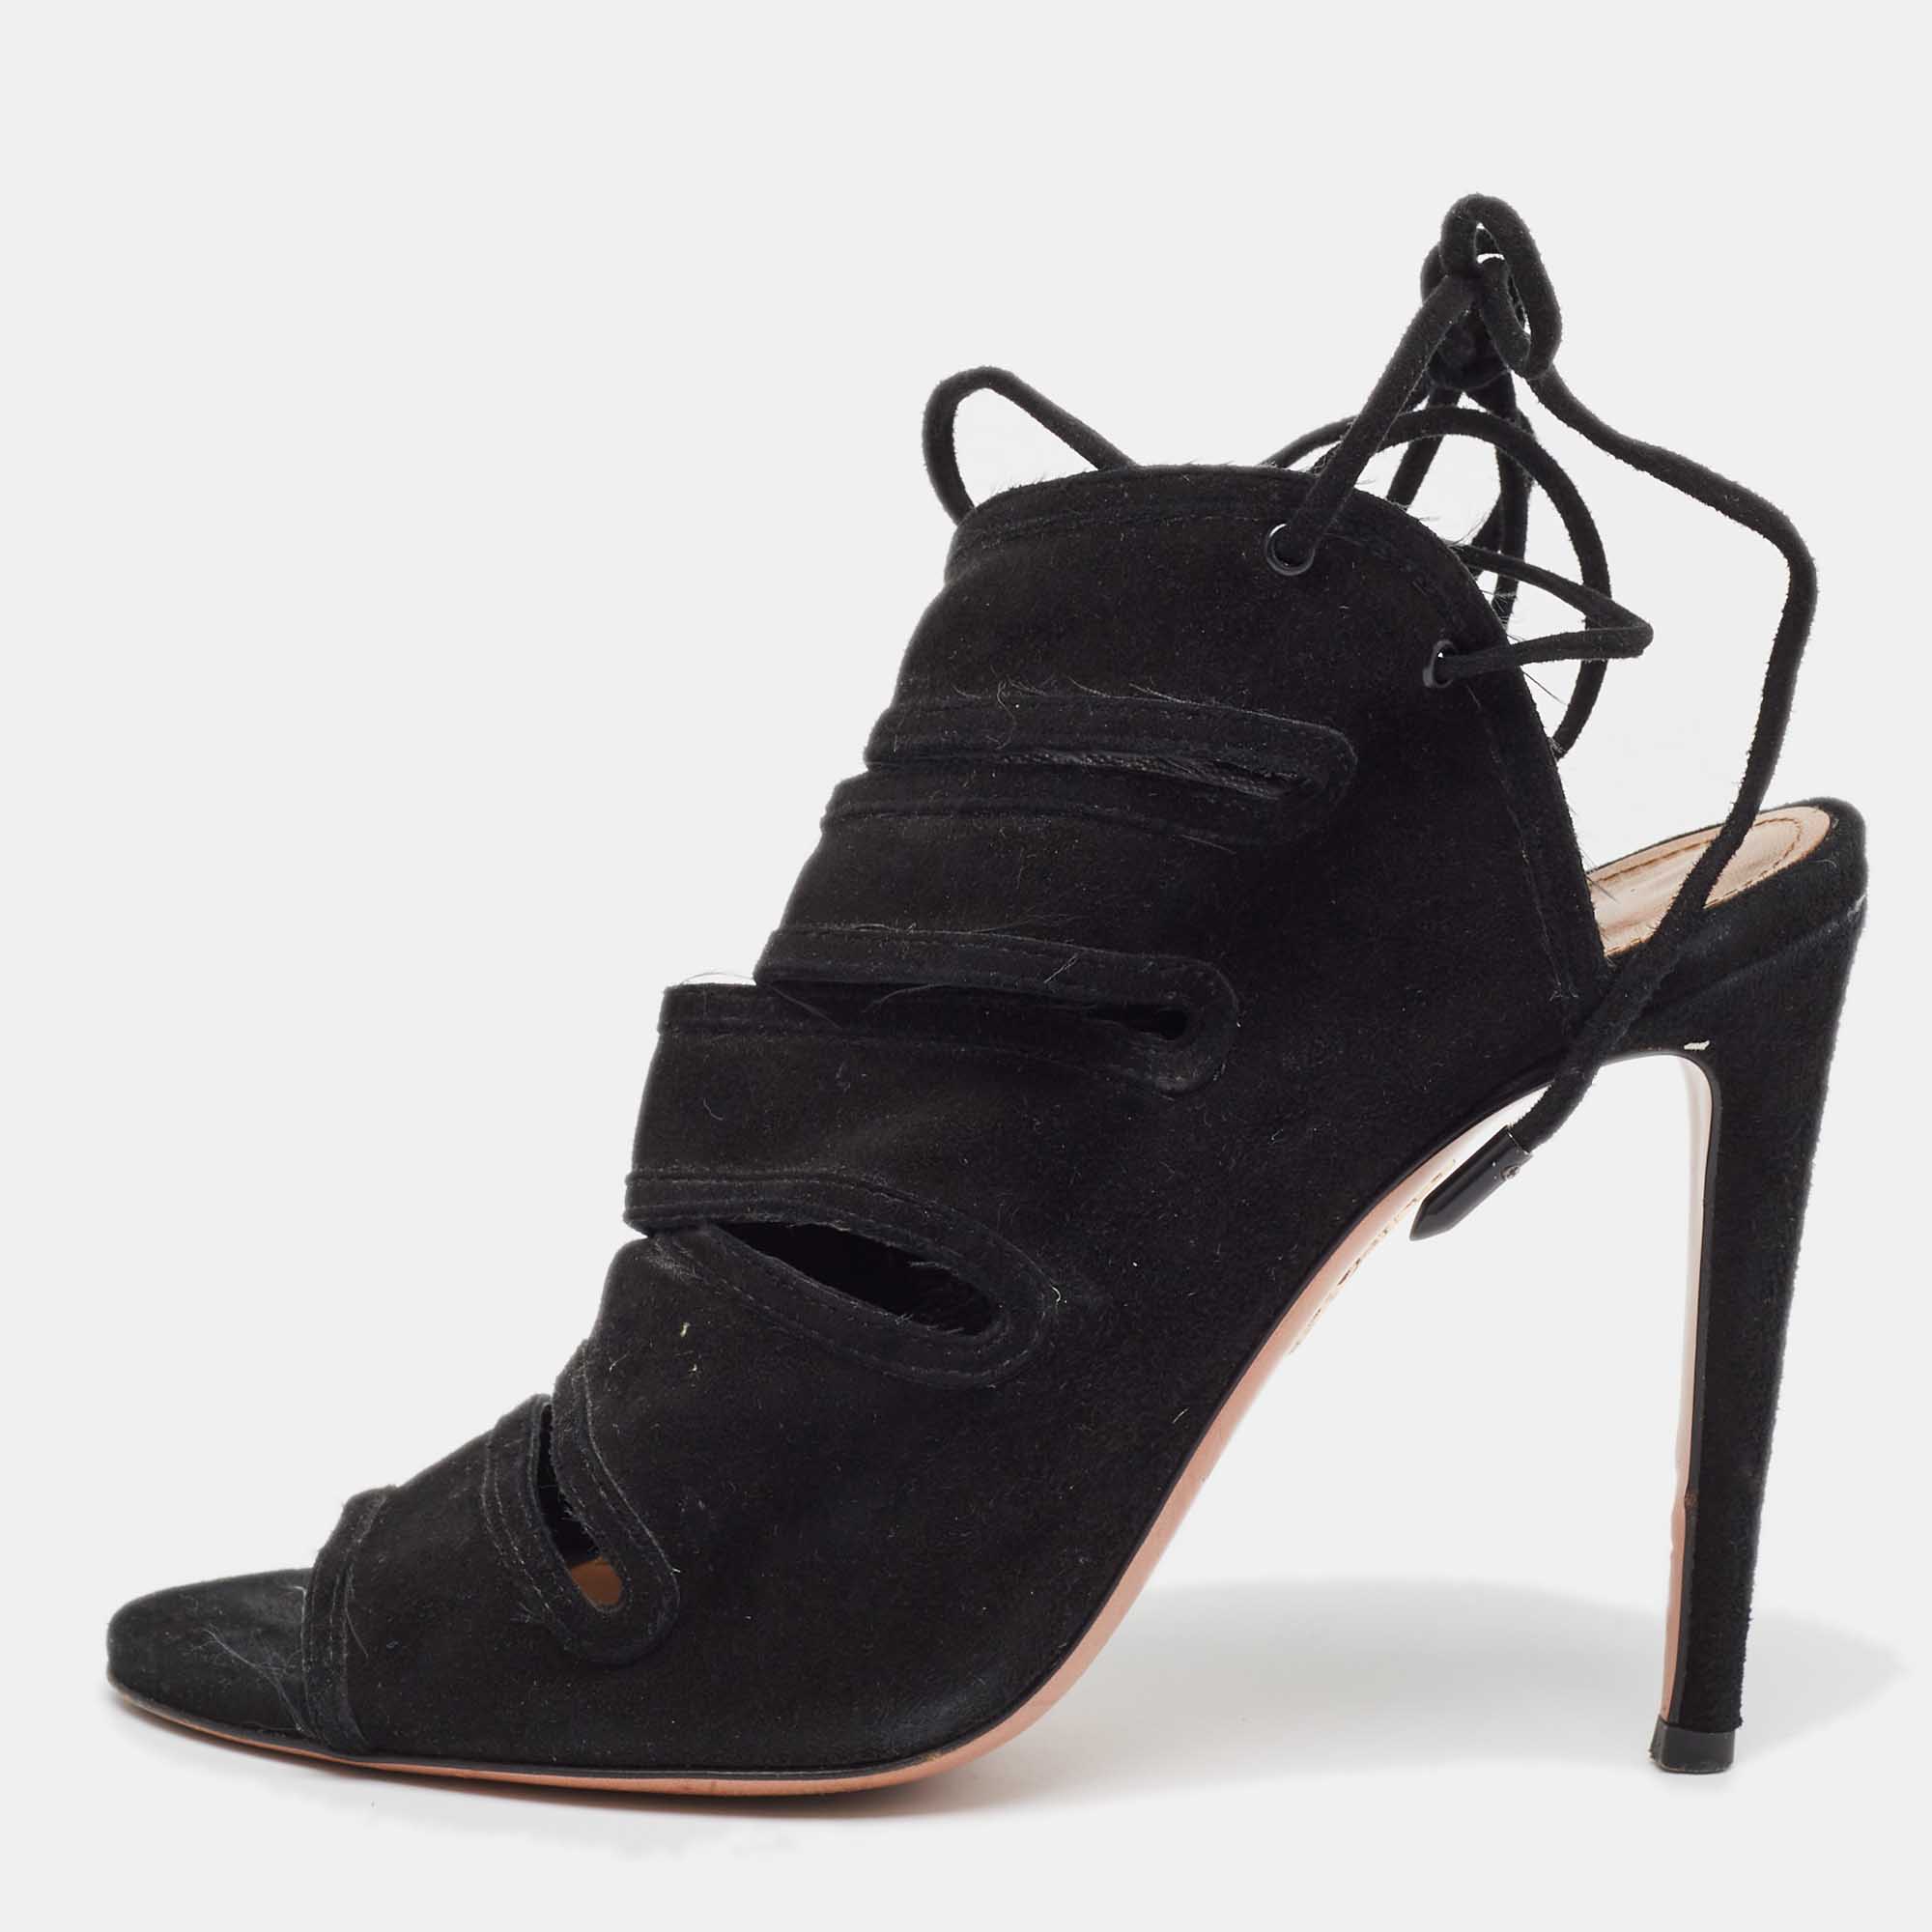 Pre-owned Aquazzura Black Suede Sloane Sandals Size 36